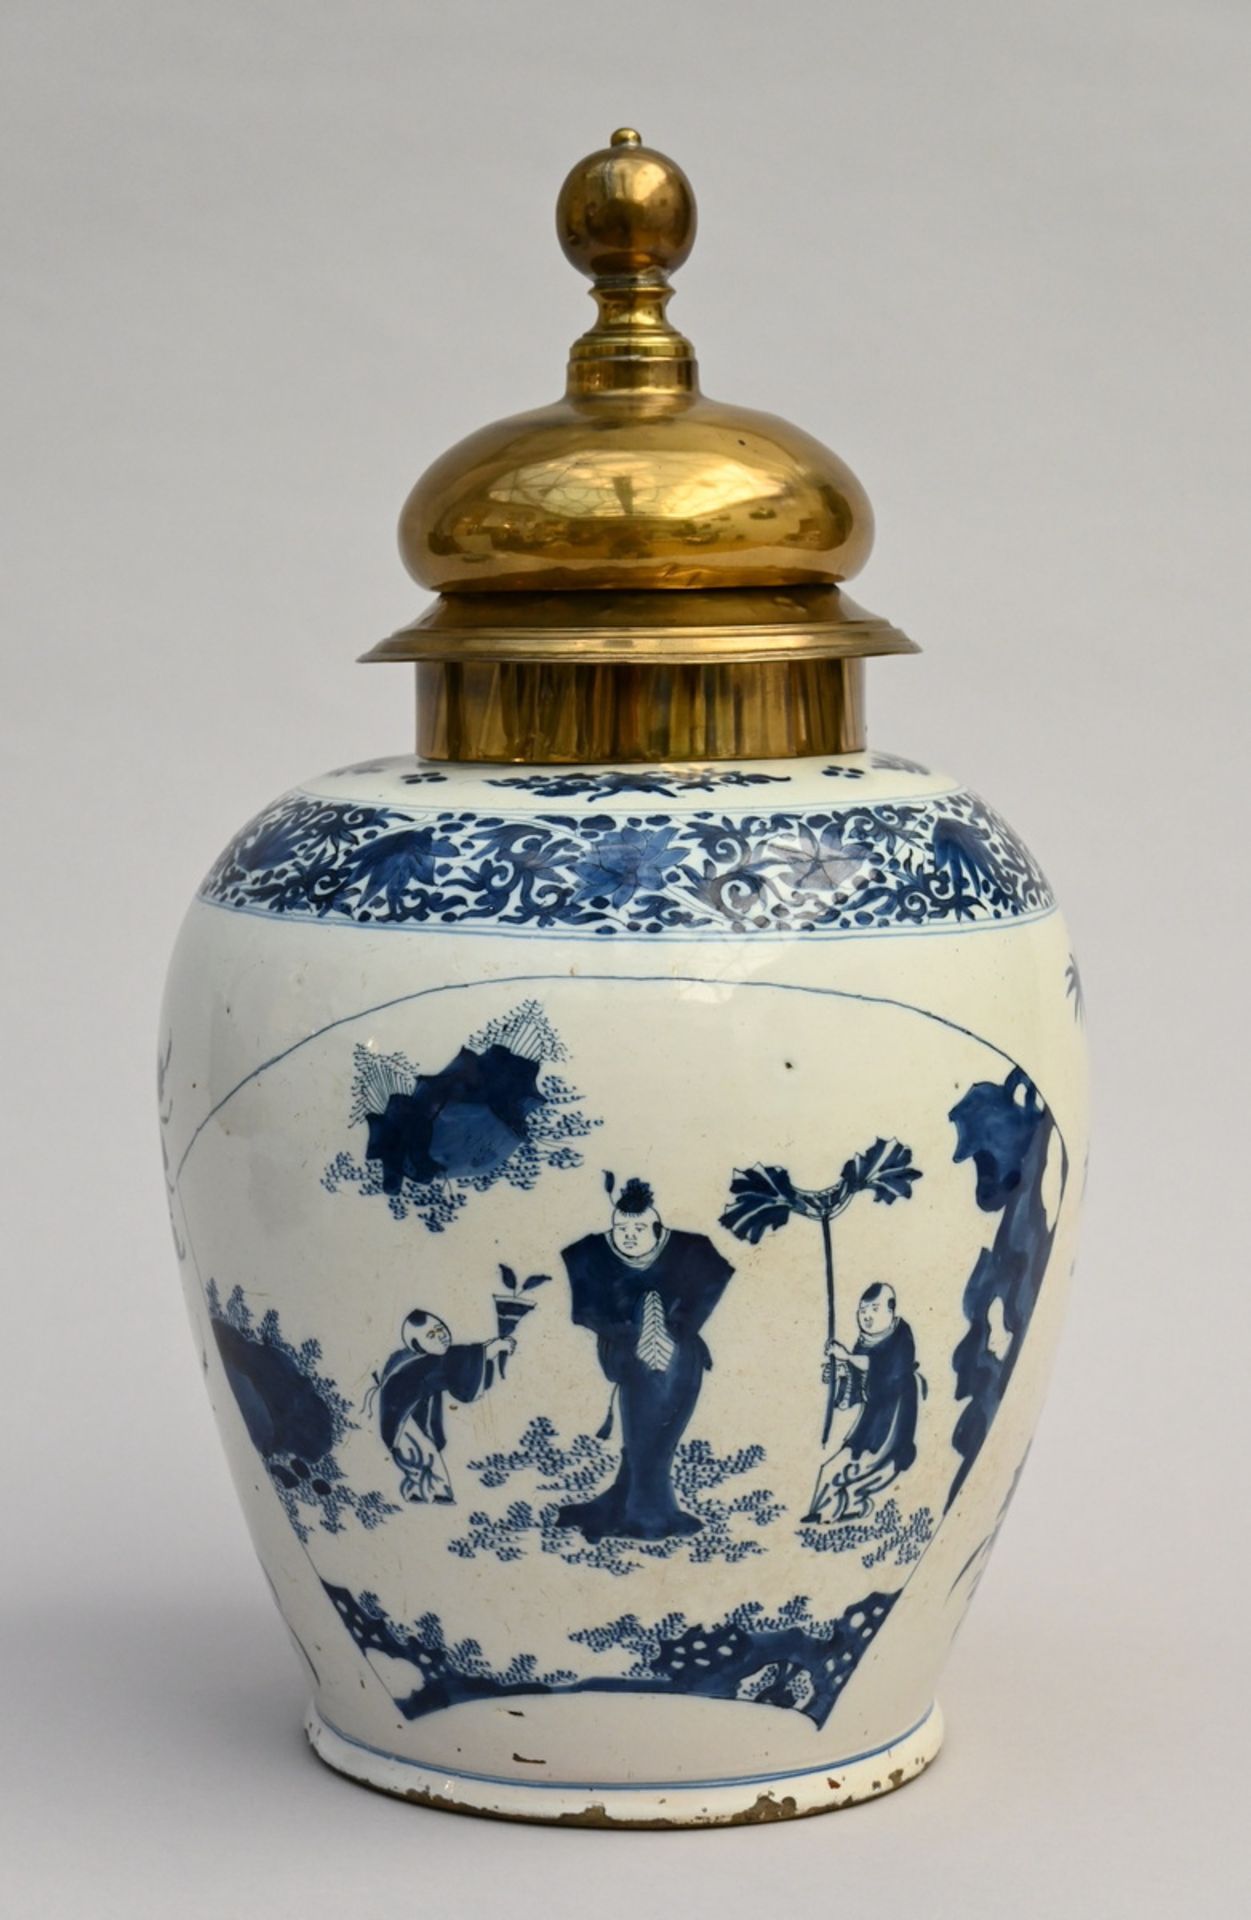 A Delft vase 'playing children', 18th century (h47cm) (*)